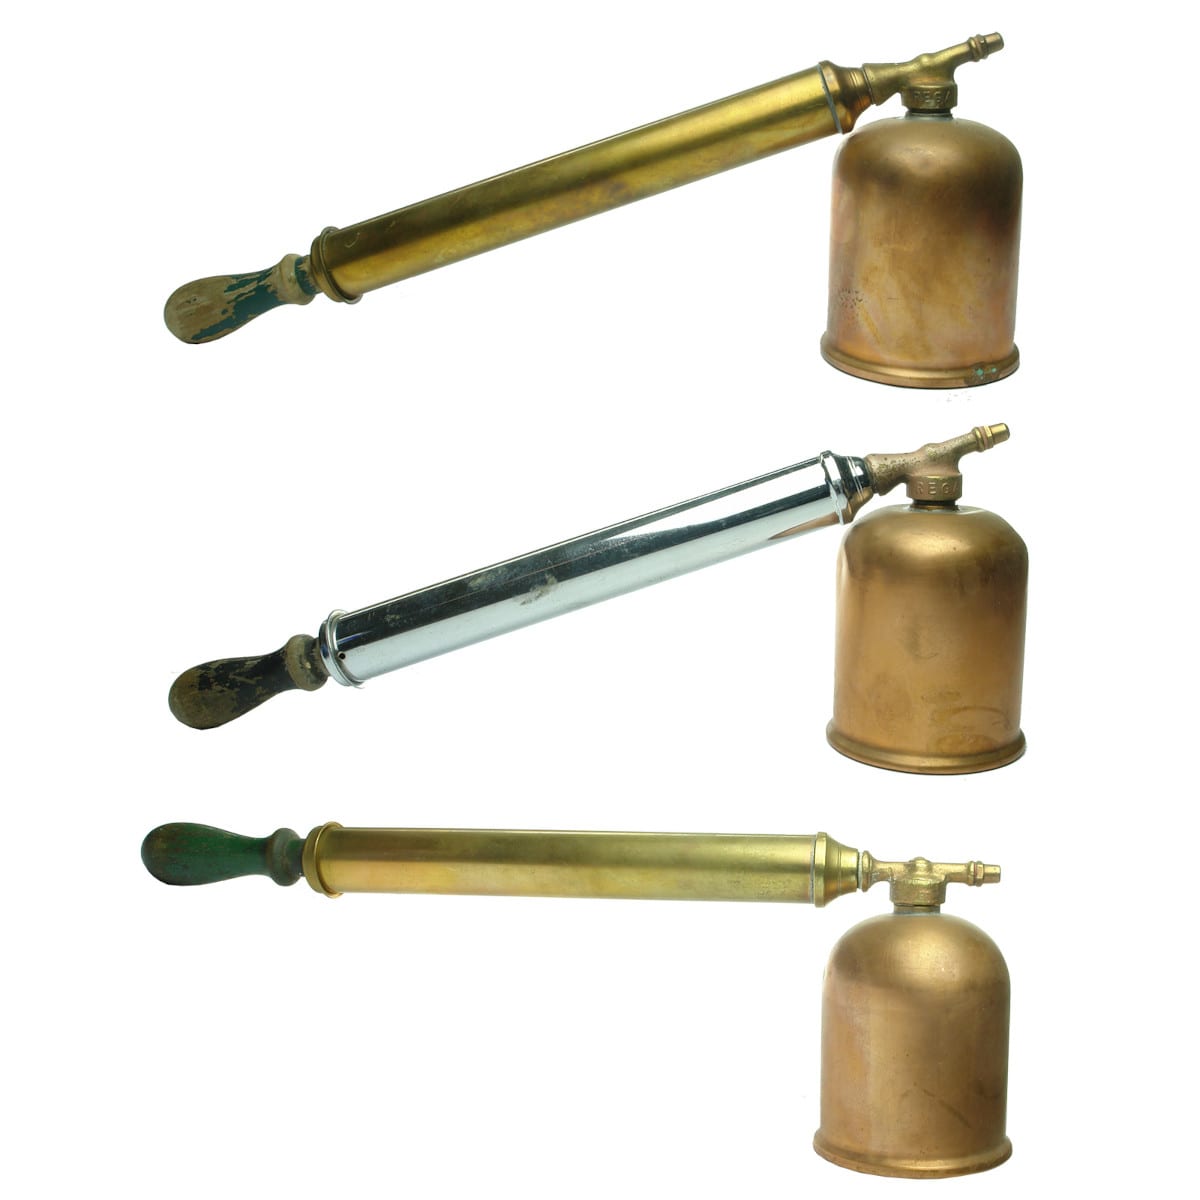 3 Brass/Copper/Steel sprayers. All Rega brand.